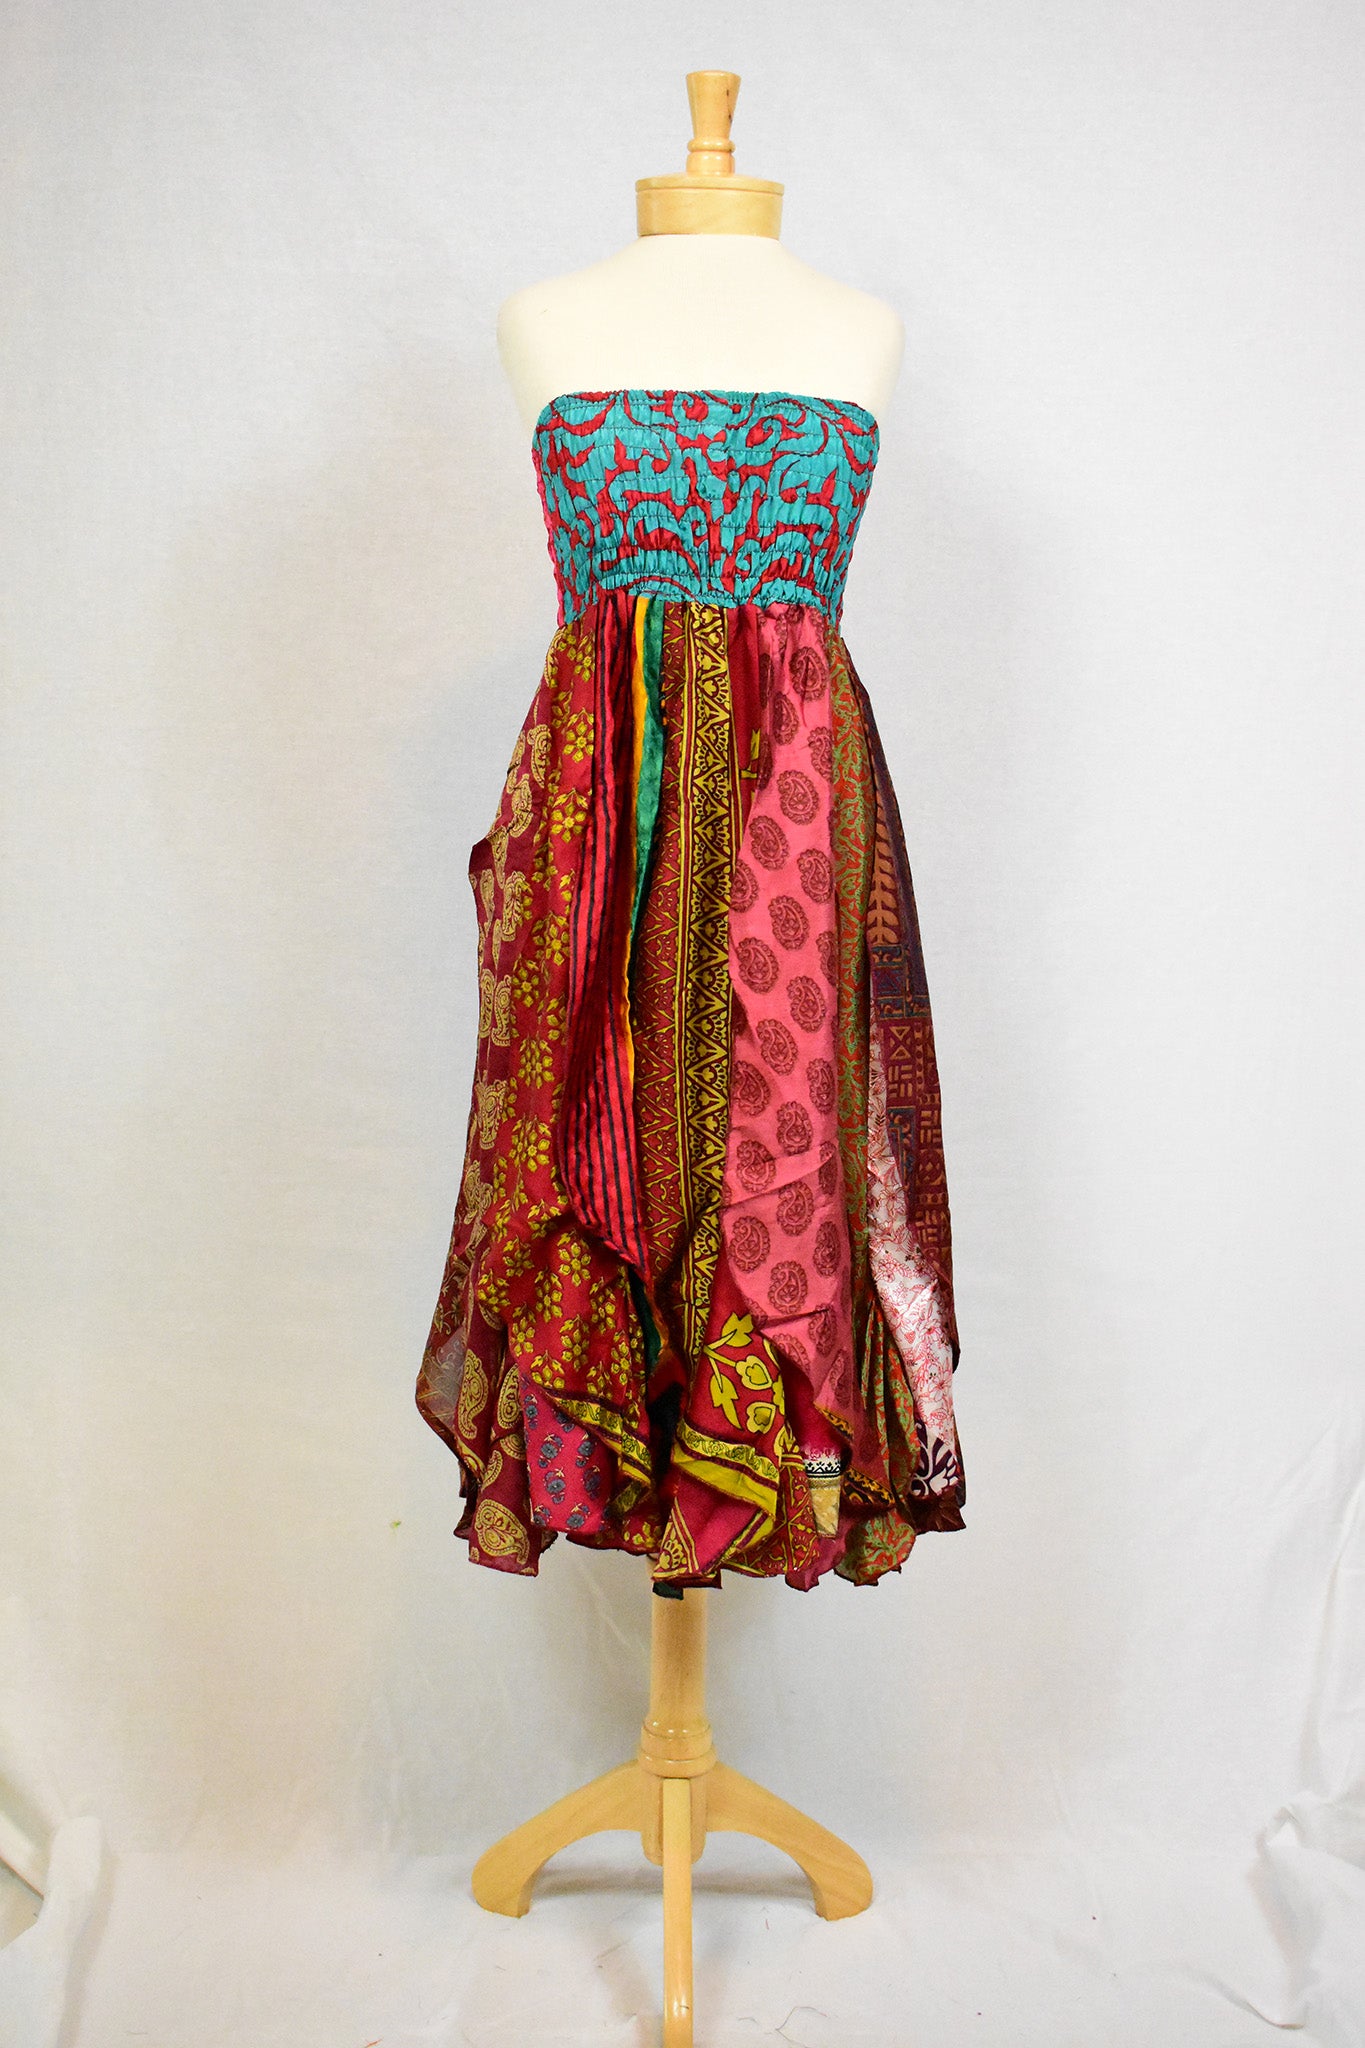 Fairy Dress Ruffle Skirt 3 Front View